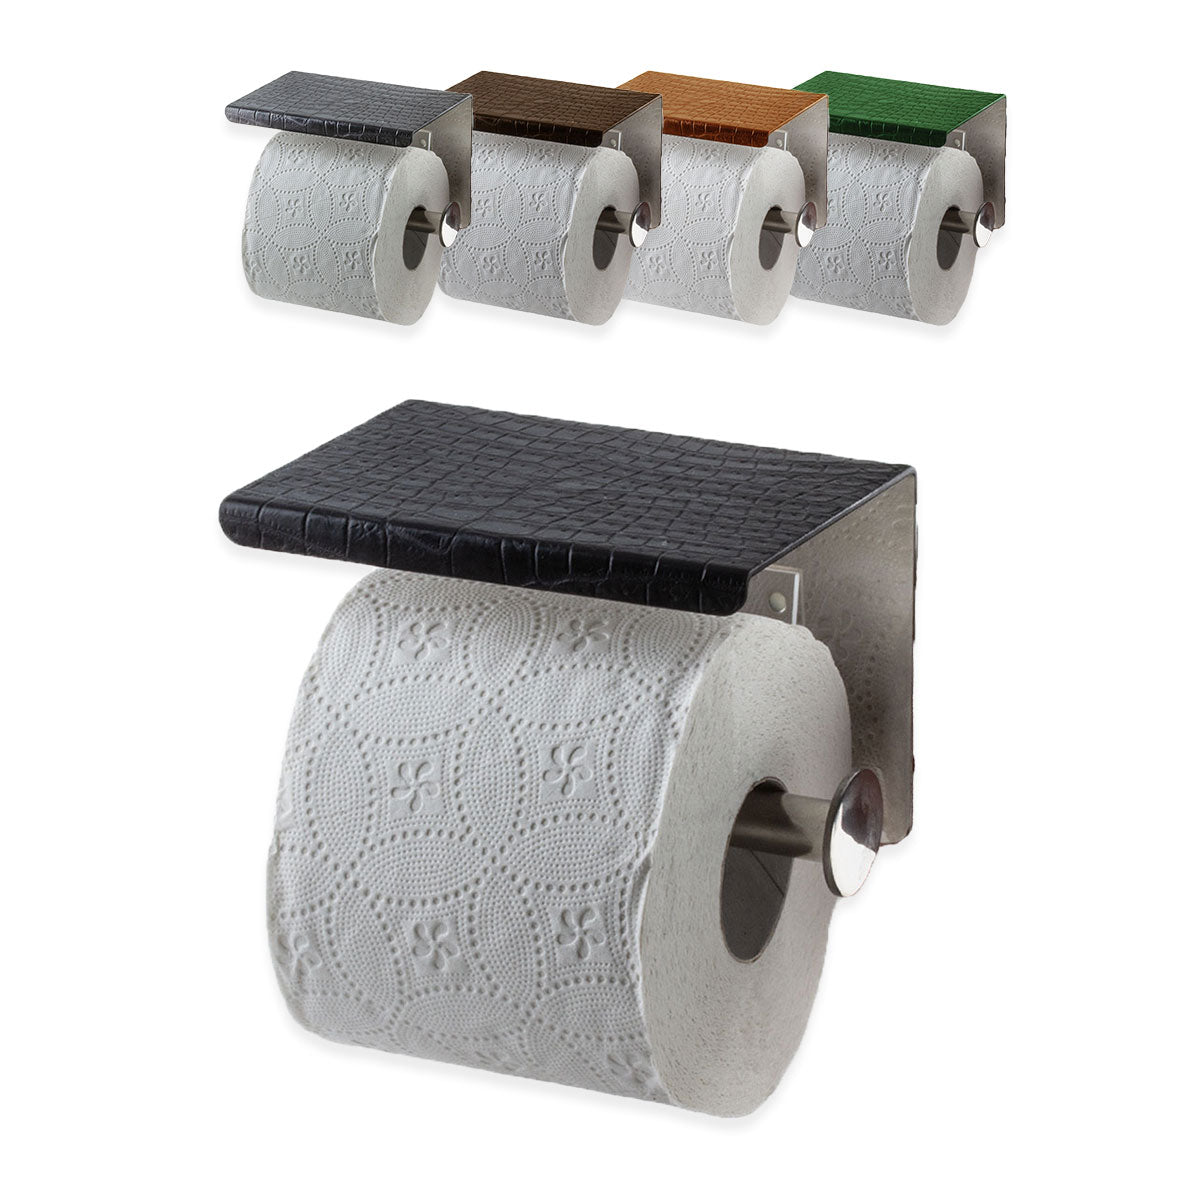 Leather toilet paper dispenser - Alligator